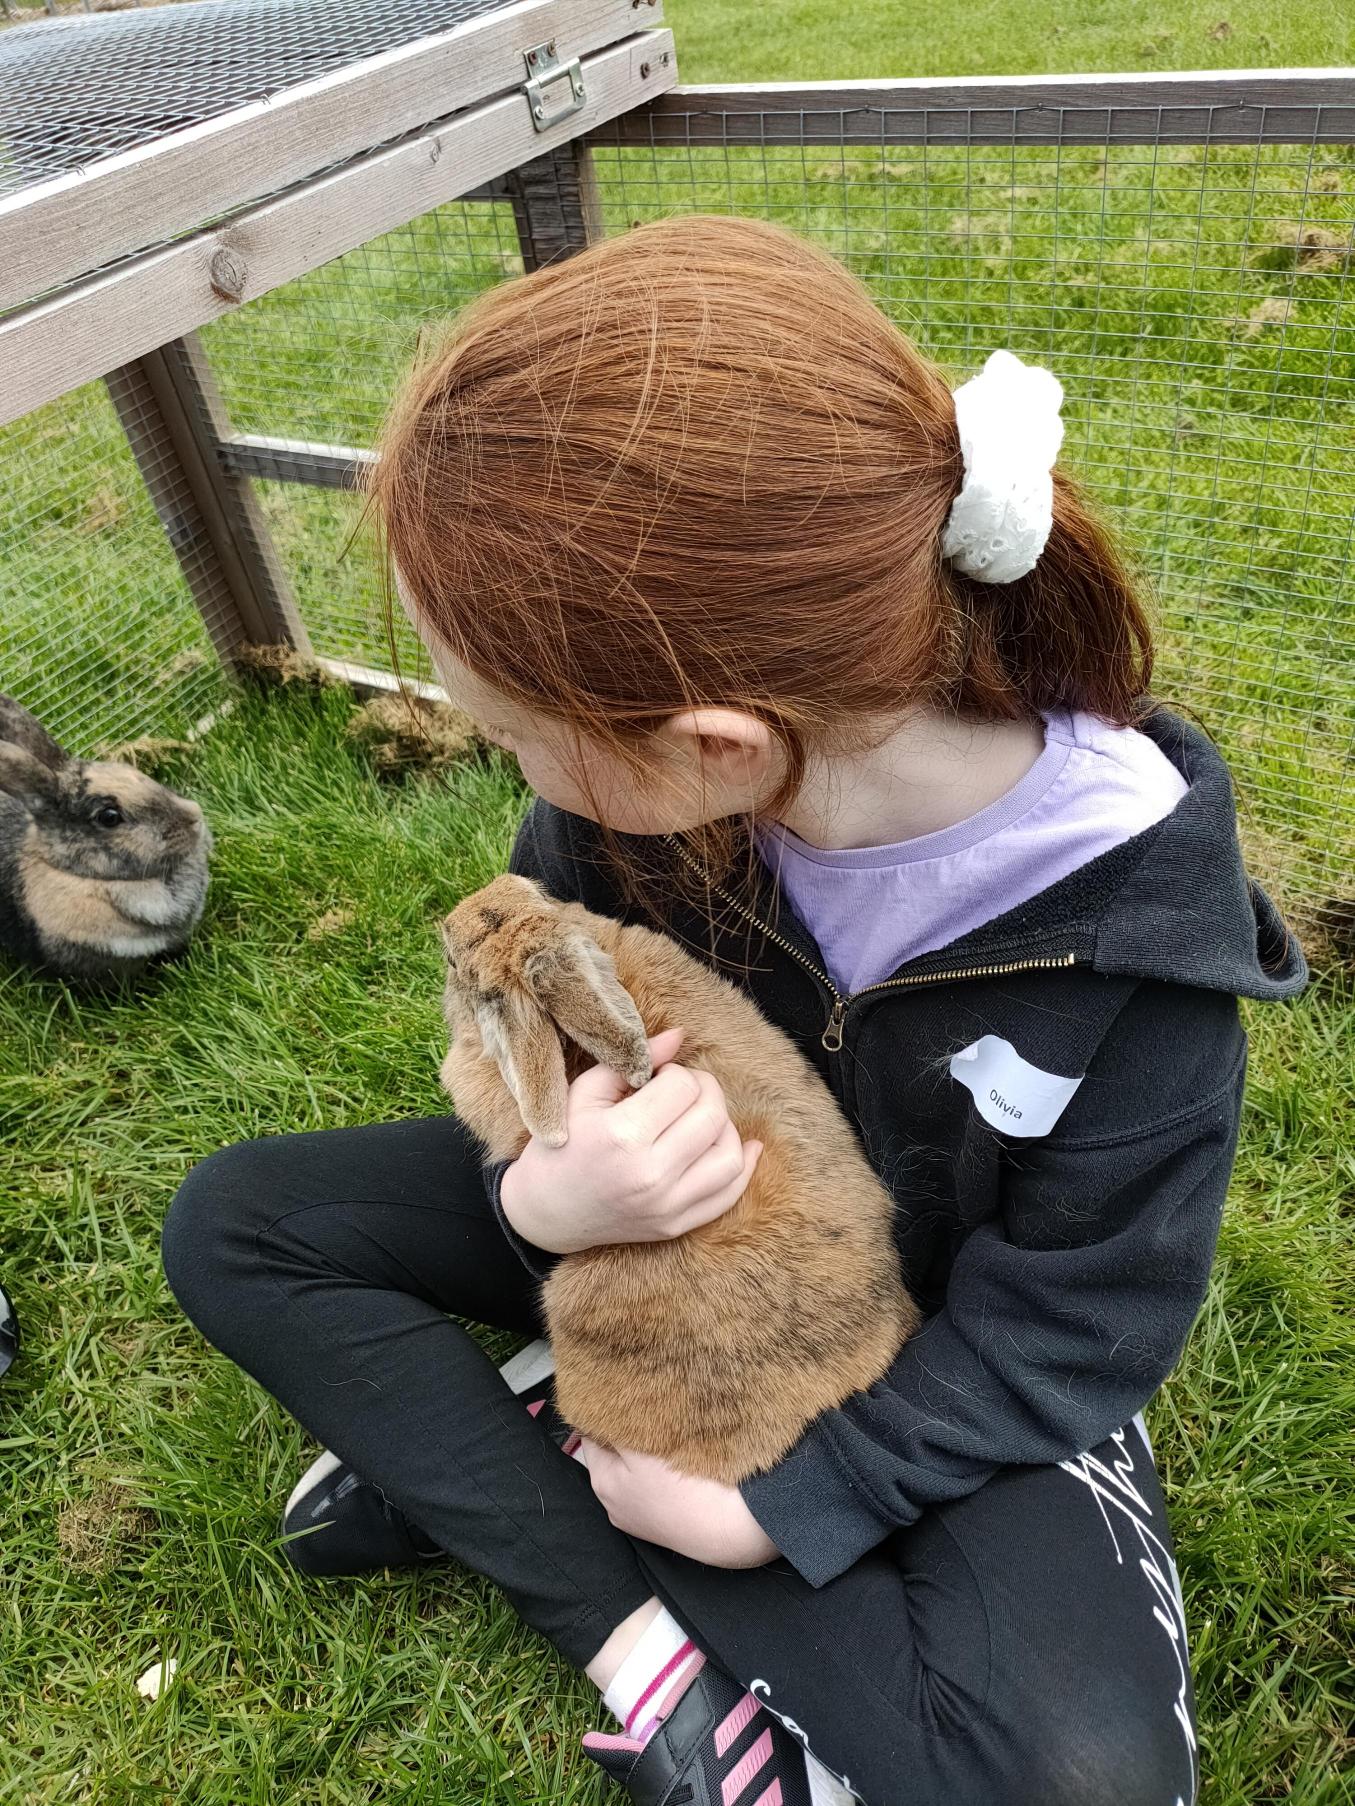 A child holding a rabbit.